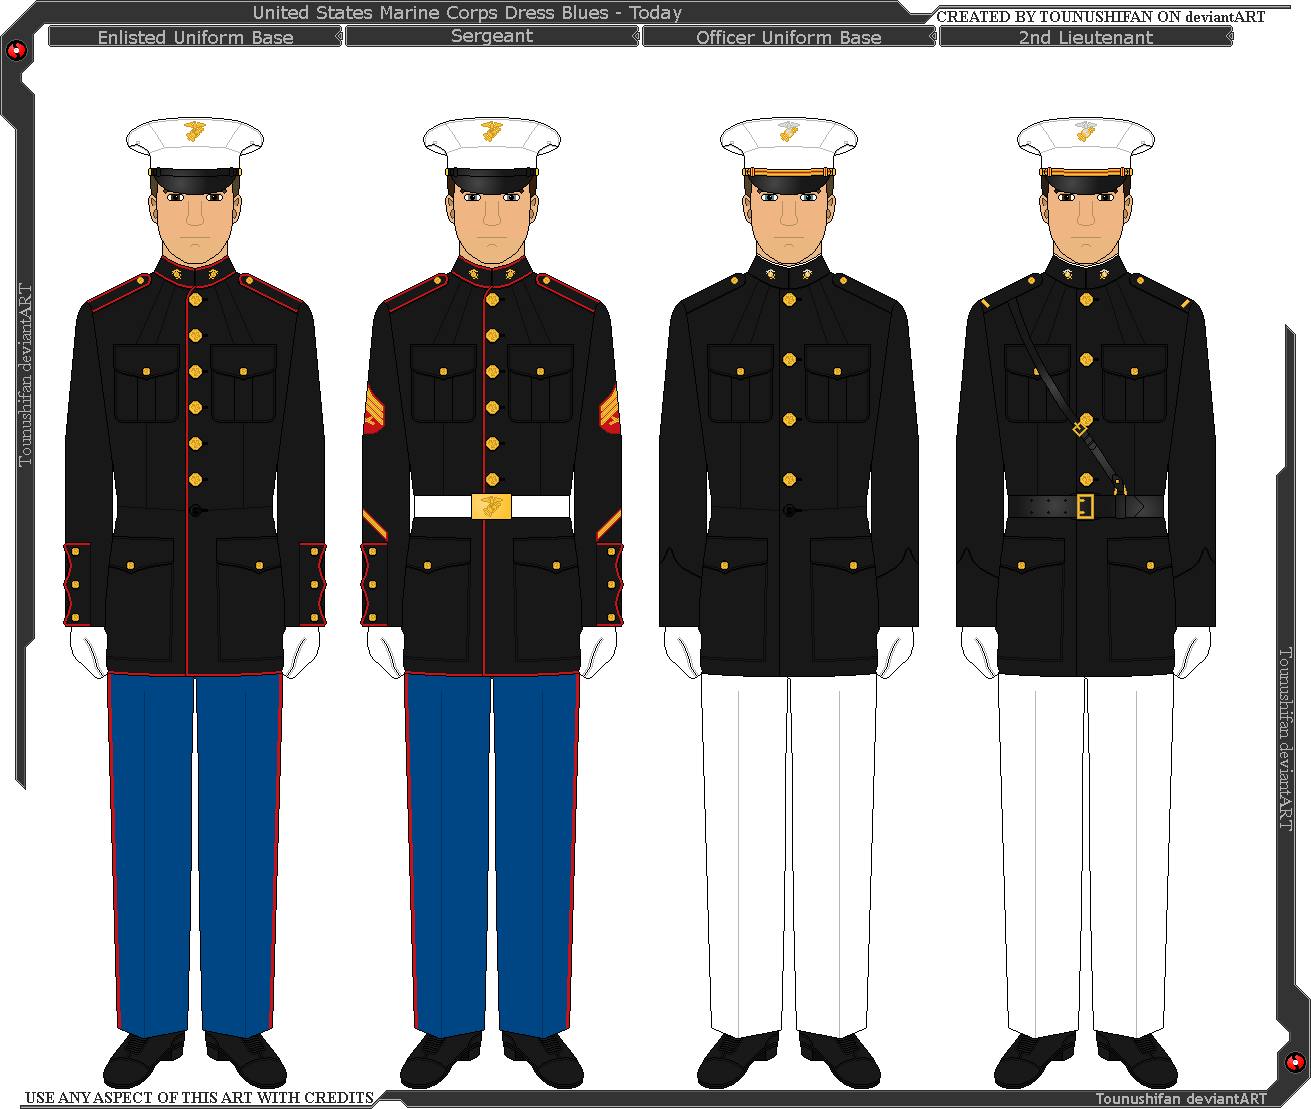 United States Marine Corps Dress Blues   Today By Tounushifan D93ef78 